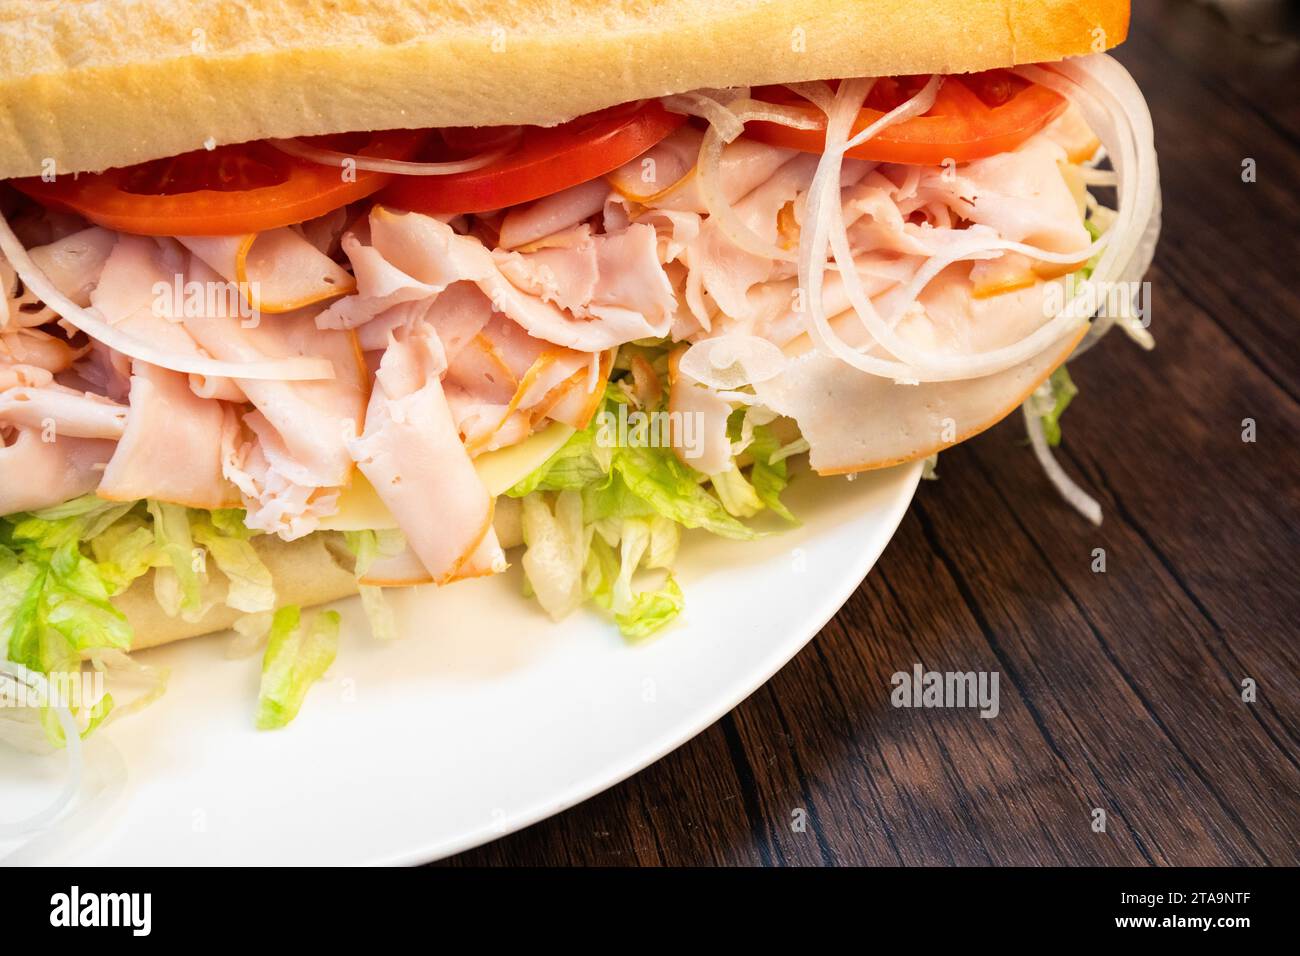 Turkey Sandwich Sub Foto Stock